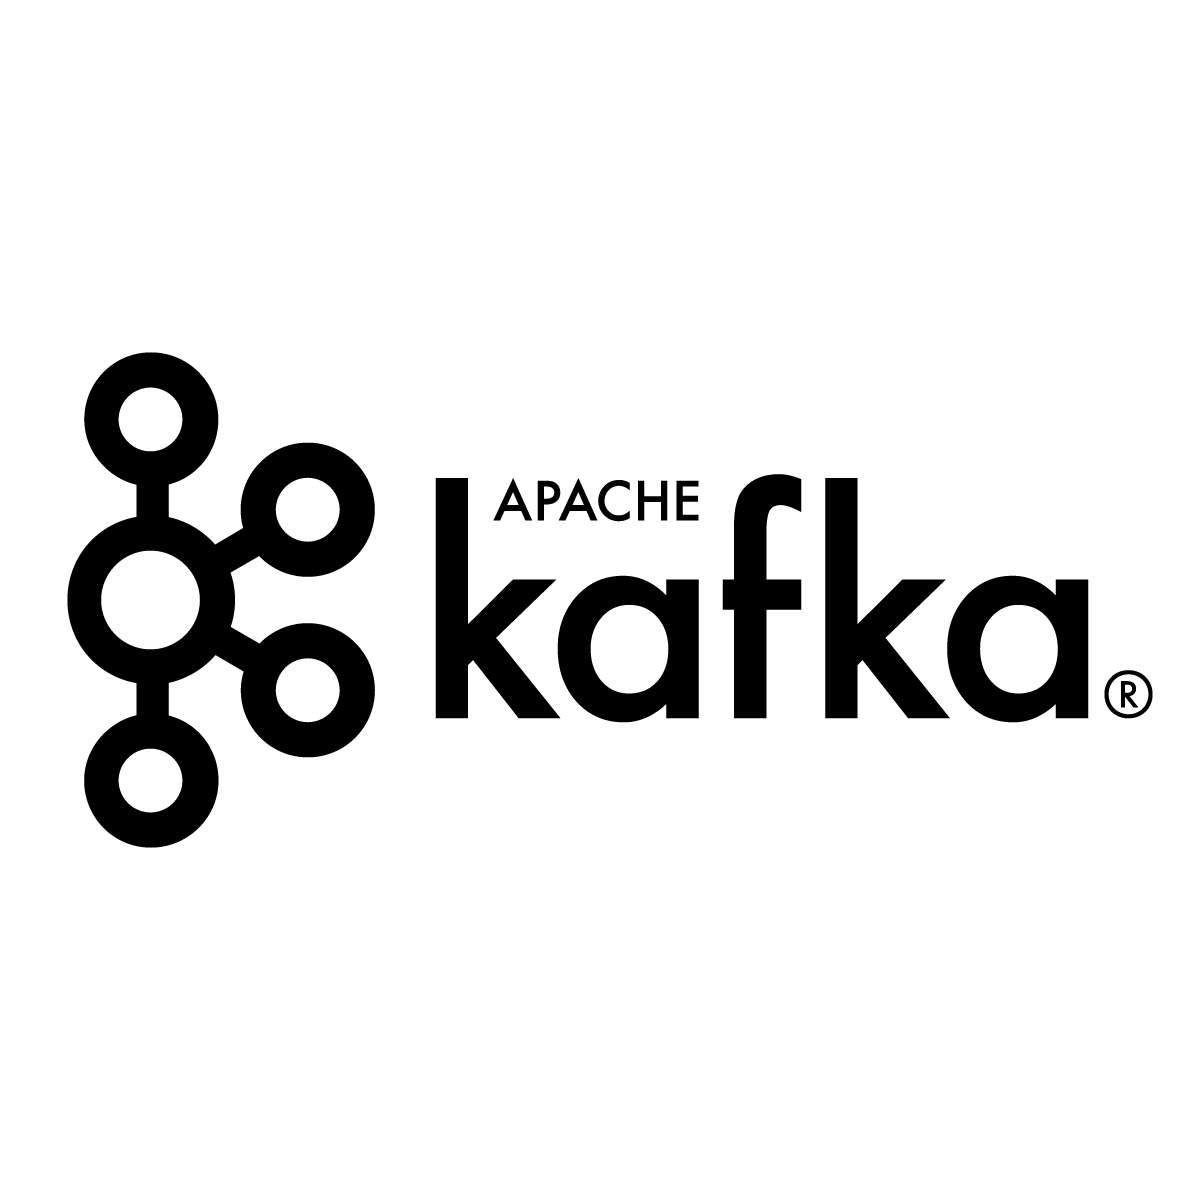 kafka replication leader follower